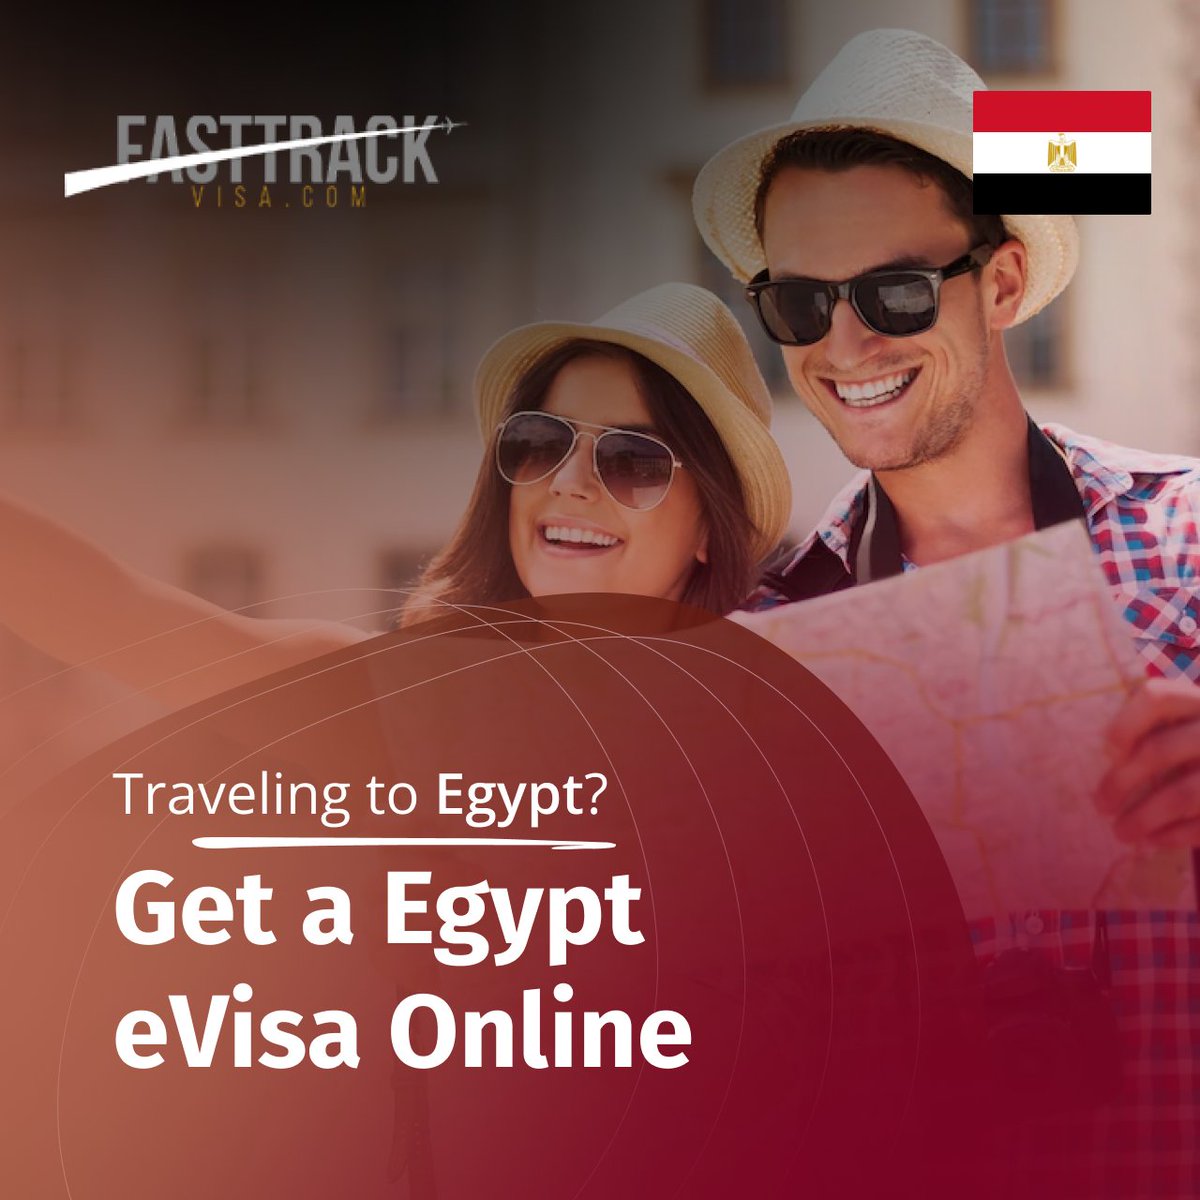 Get A Egypt e-Visa Online
Top leading online visa service provider company.
Fast Track Visa offers something for everyone!!
fasttrackvisa.com/most.../egypt/…
#evisa #visa #immigration #visaconsultants #touristvisa #visitvisa #fastrackvisa #fasttracktrip #egyptvisa
#travelstagram